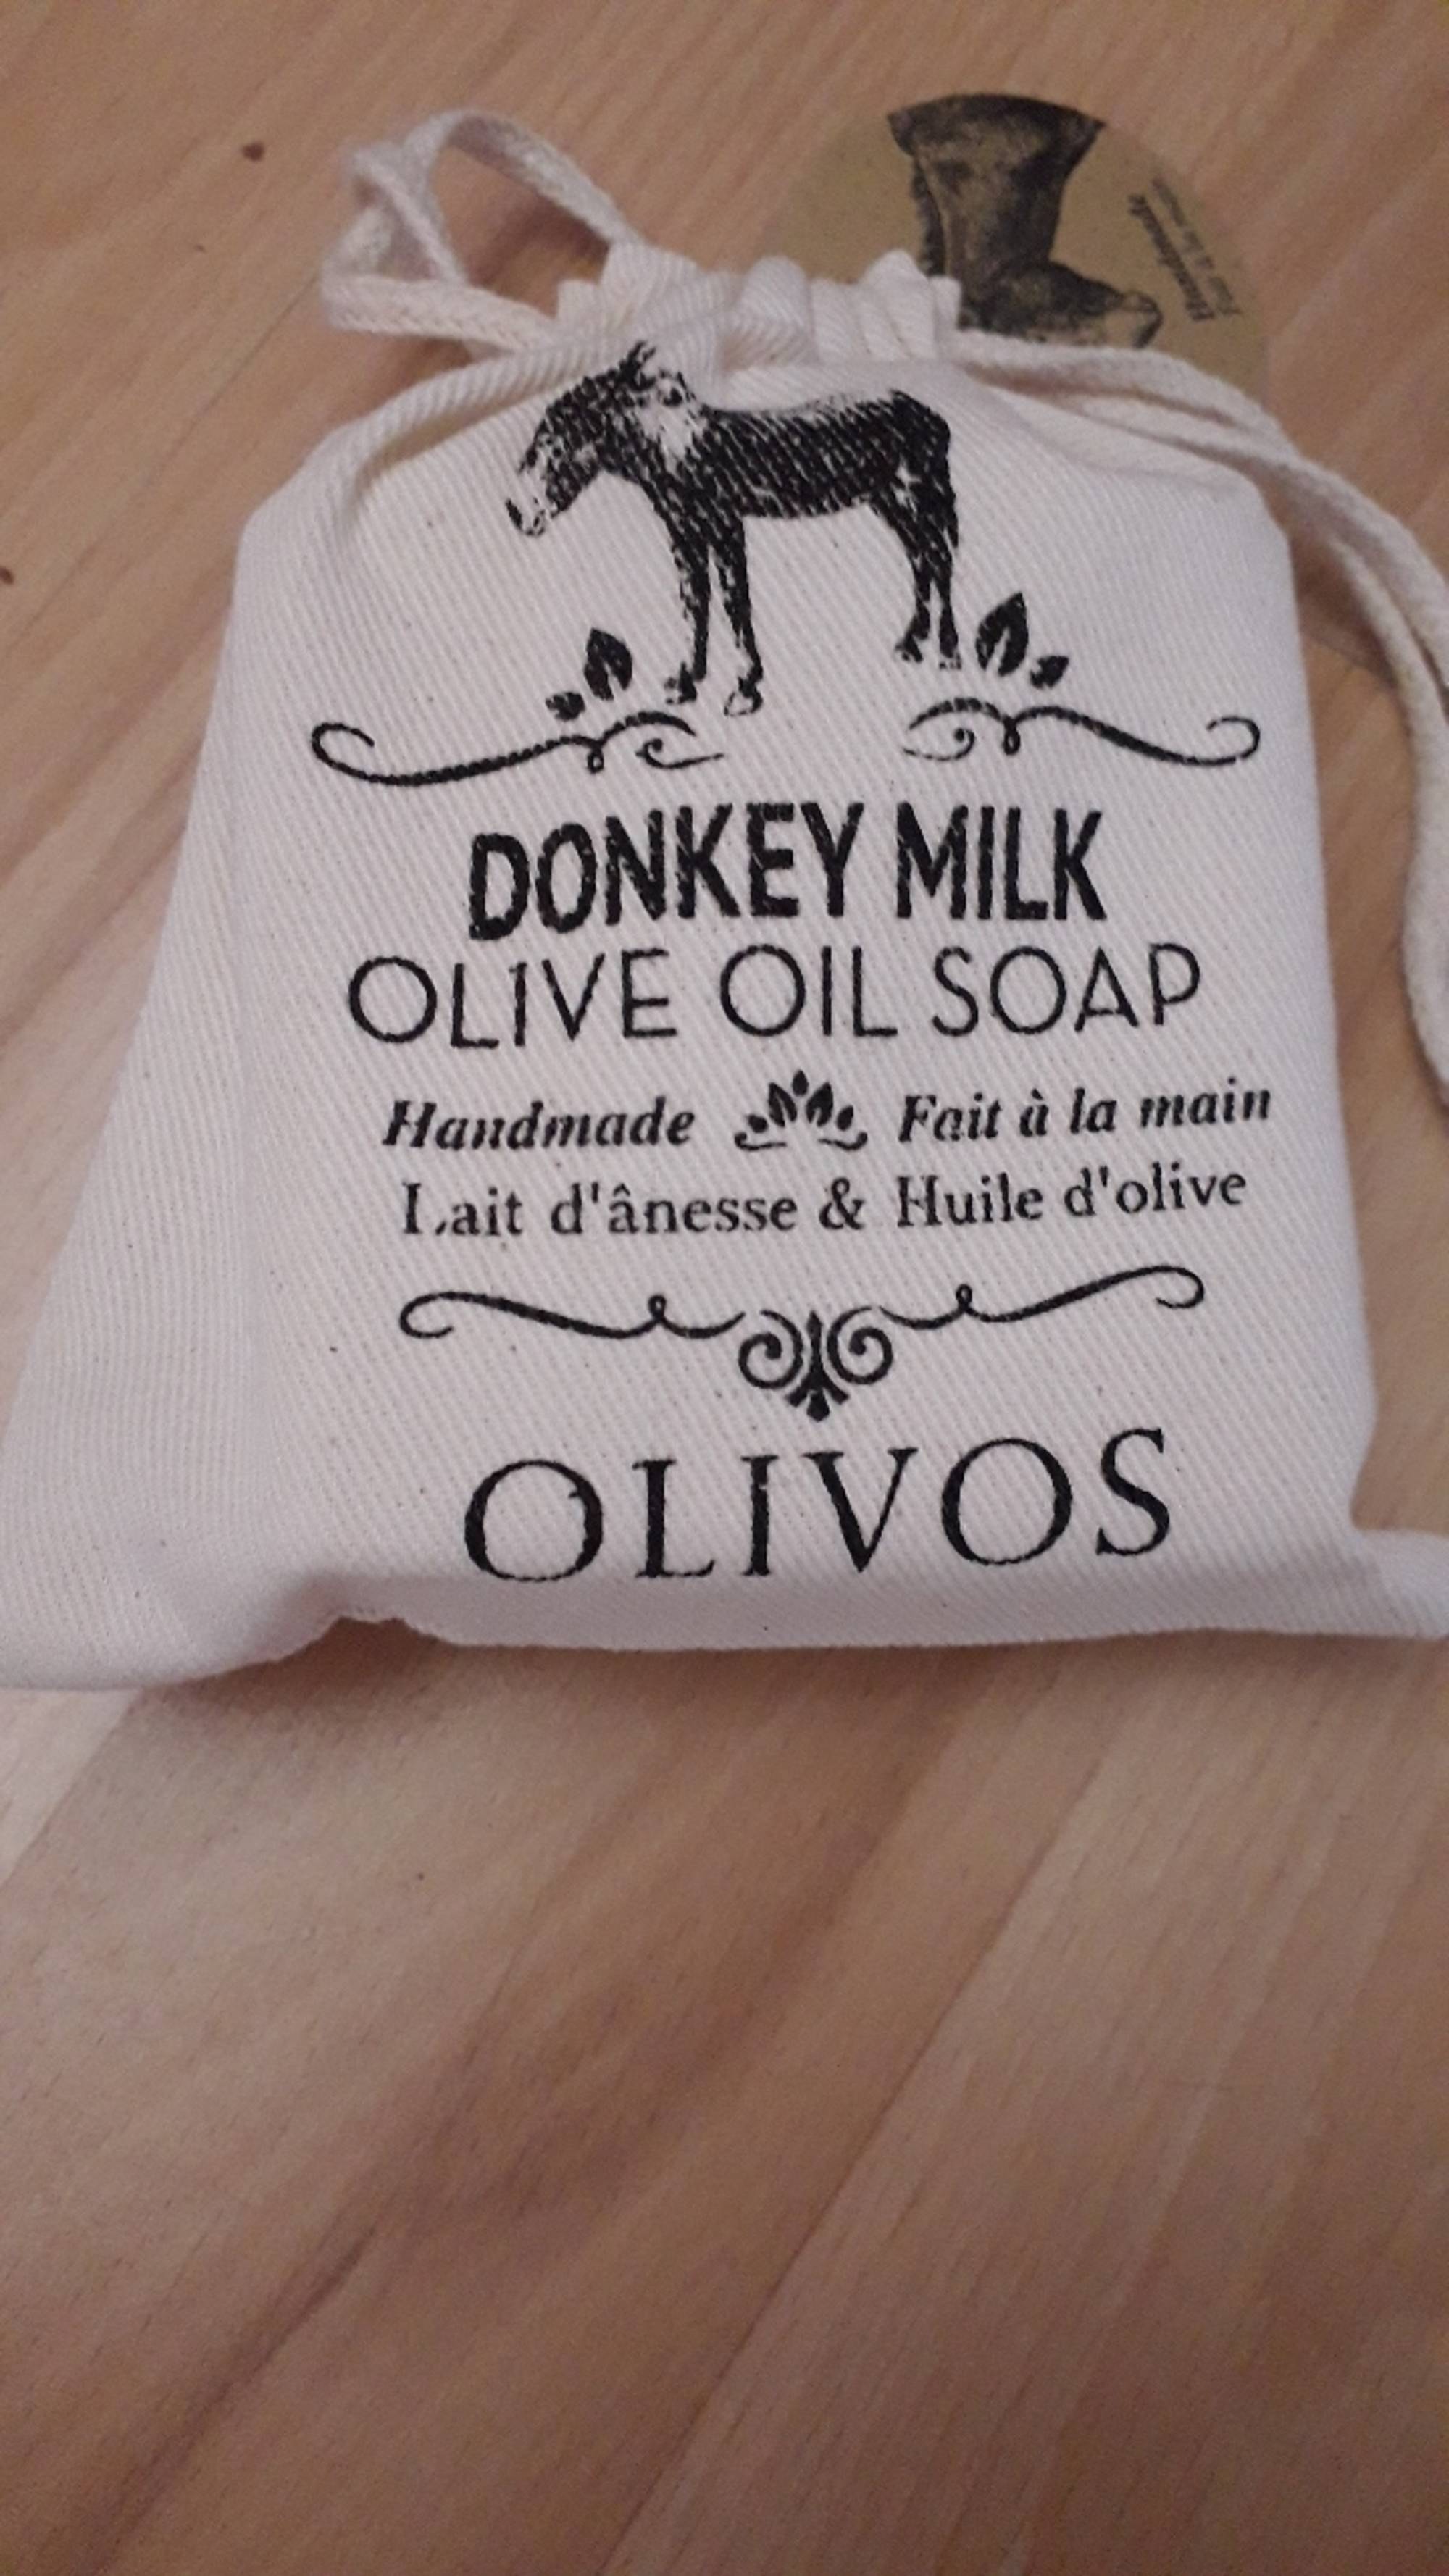 OLIVOS - Donkey milk - Olive oil soap